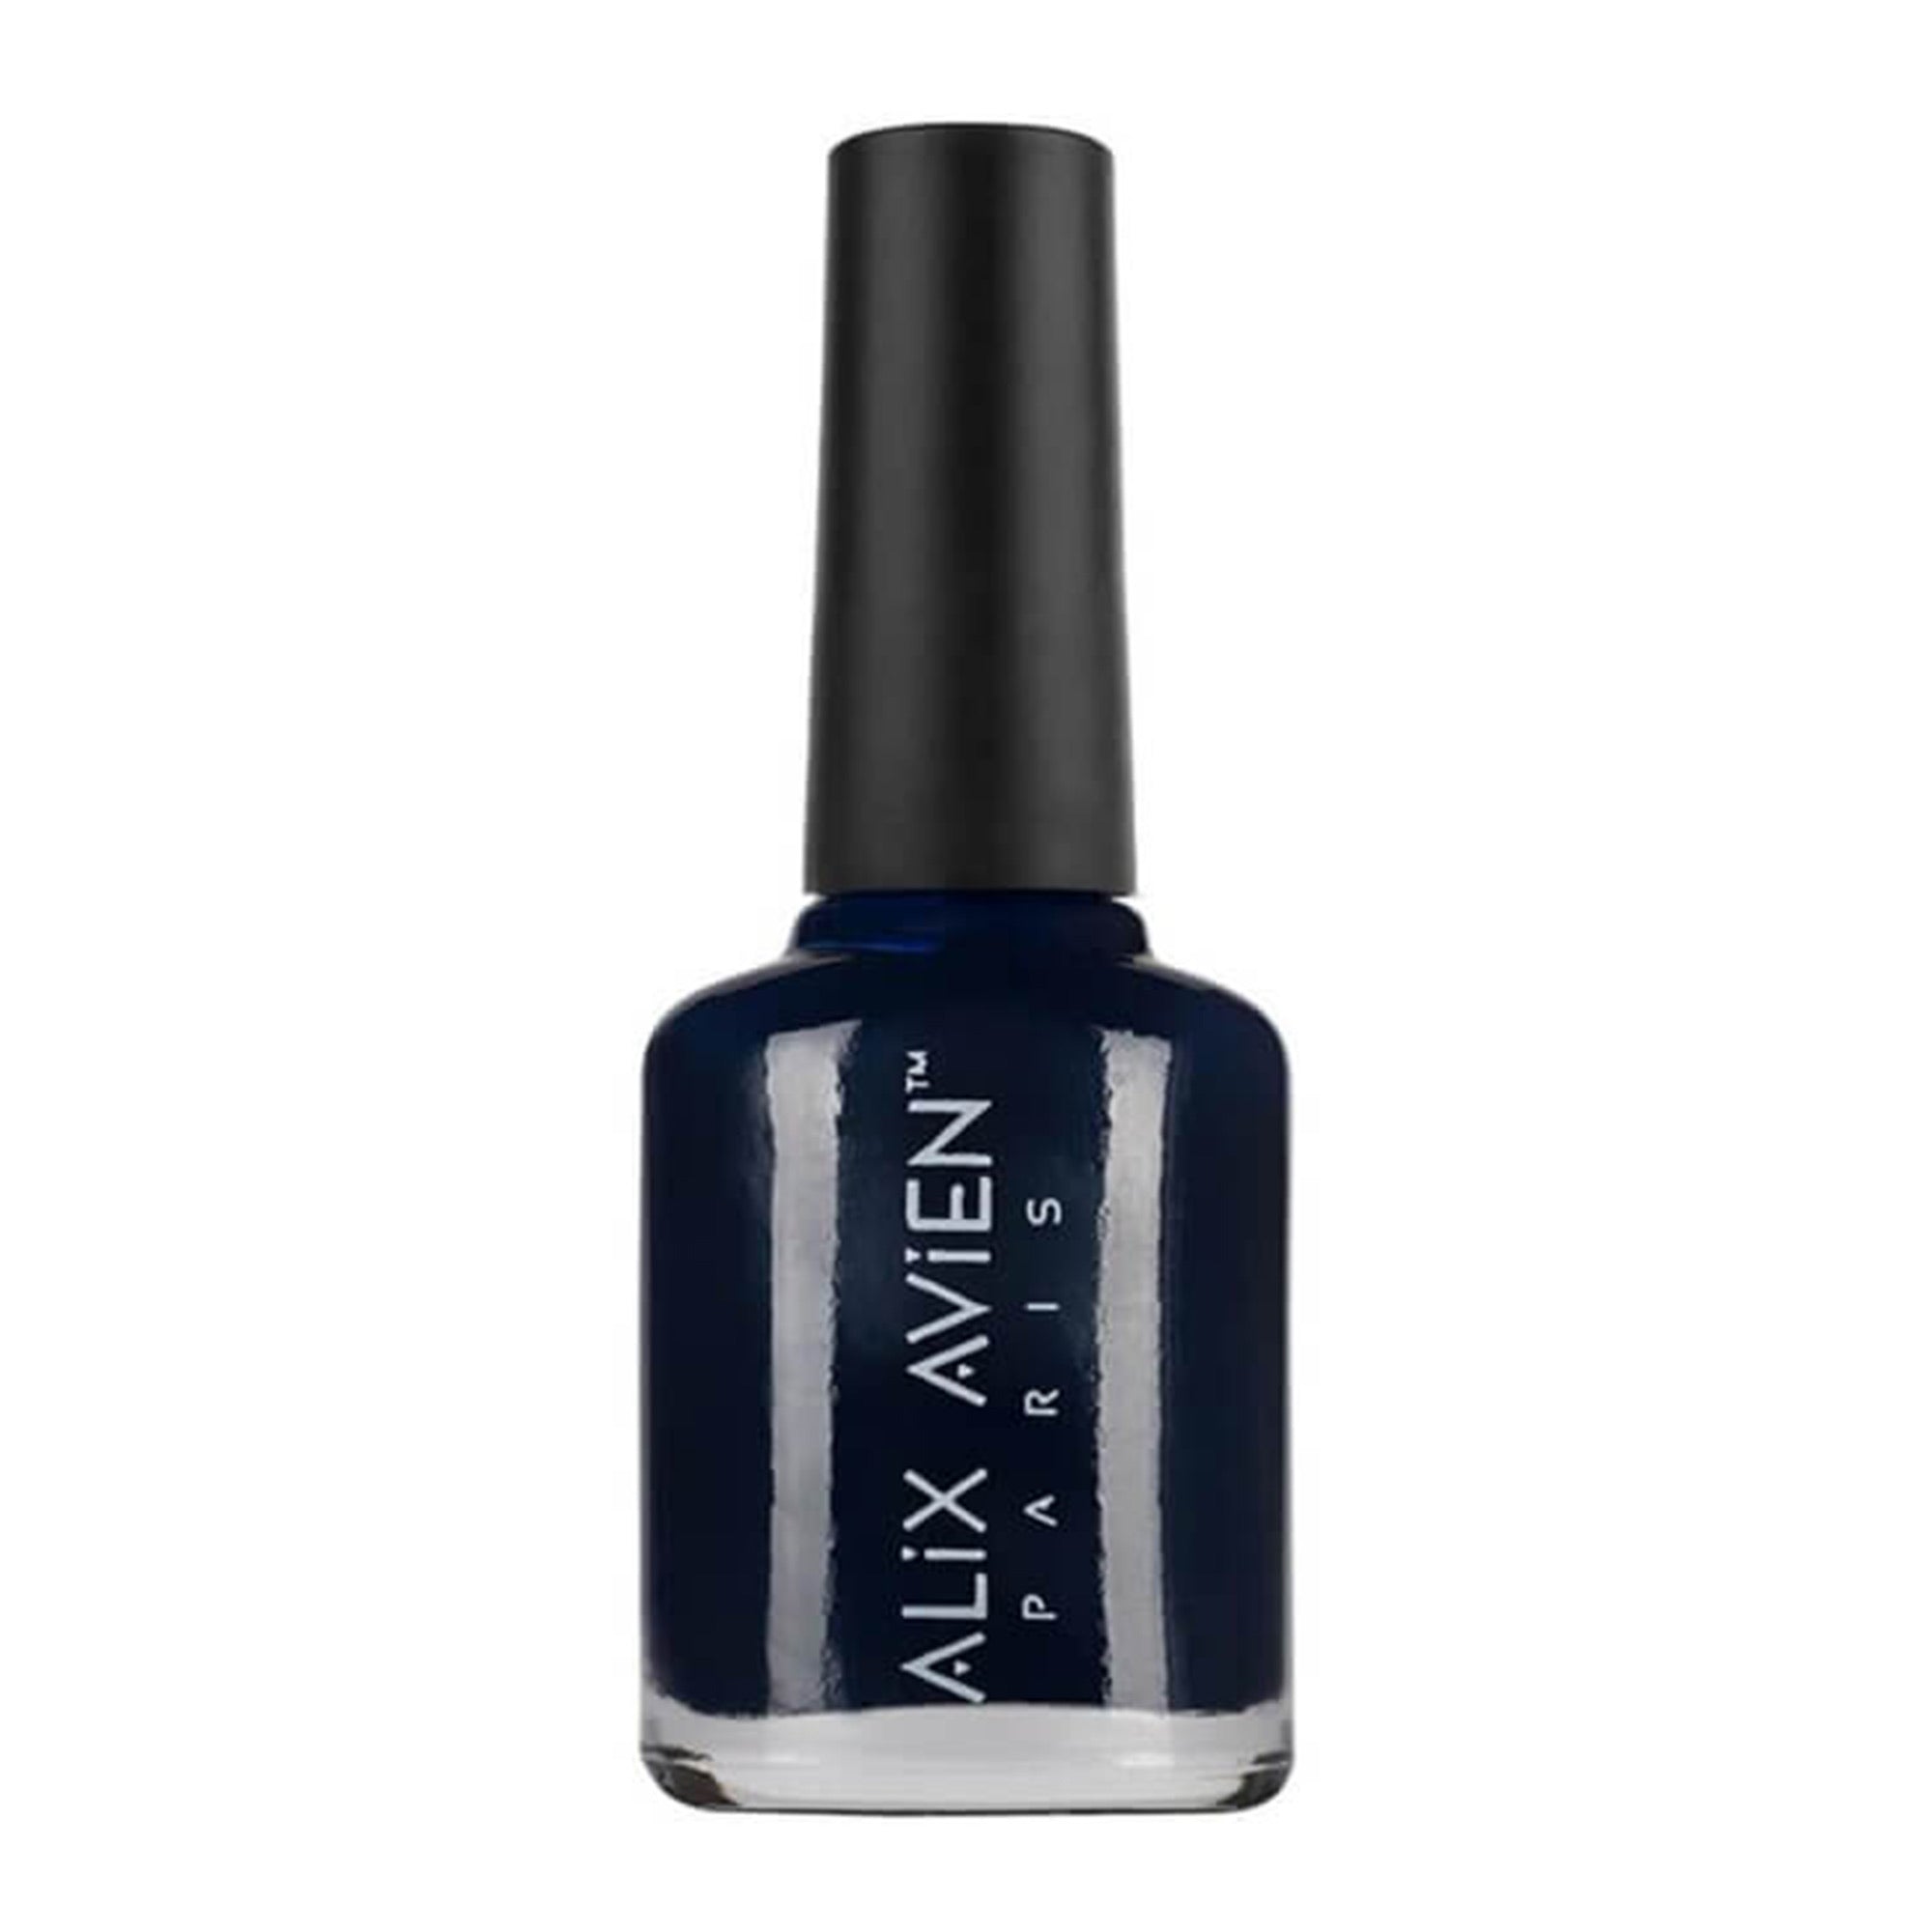 Alix Avien - Nail Polish No.25 (Midnight Blue)